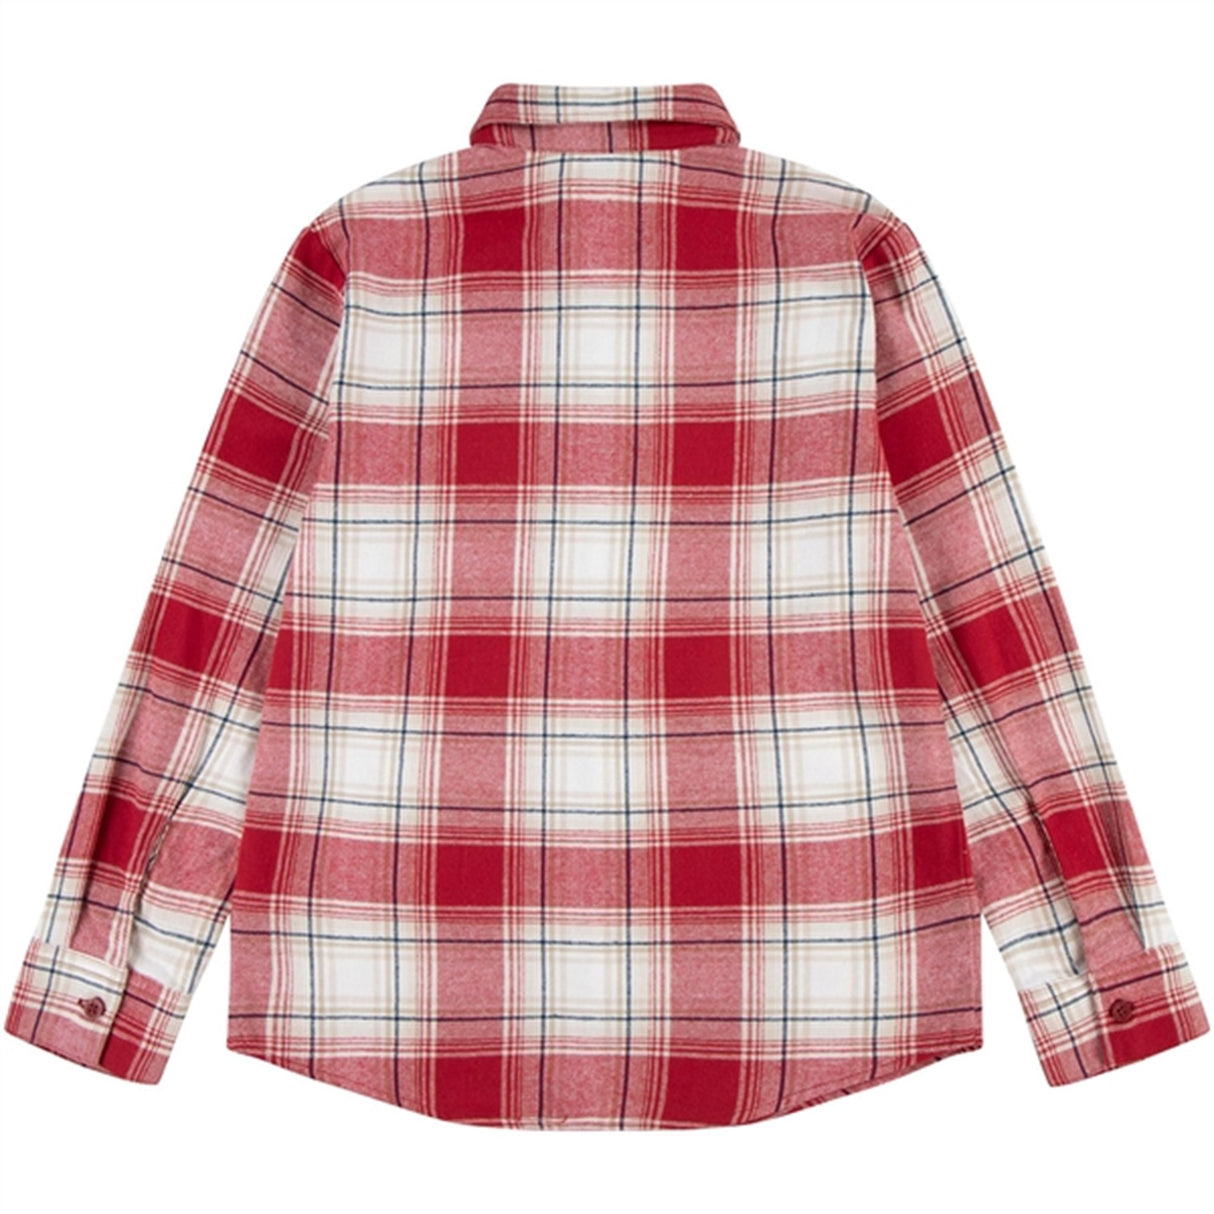 Levi's Plaid Flannel Pocket Shirt Rhythmic Red 4